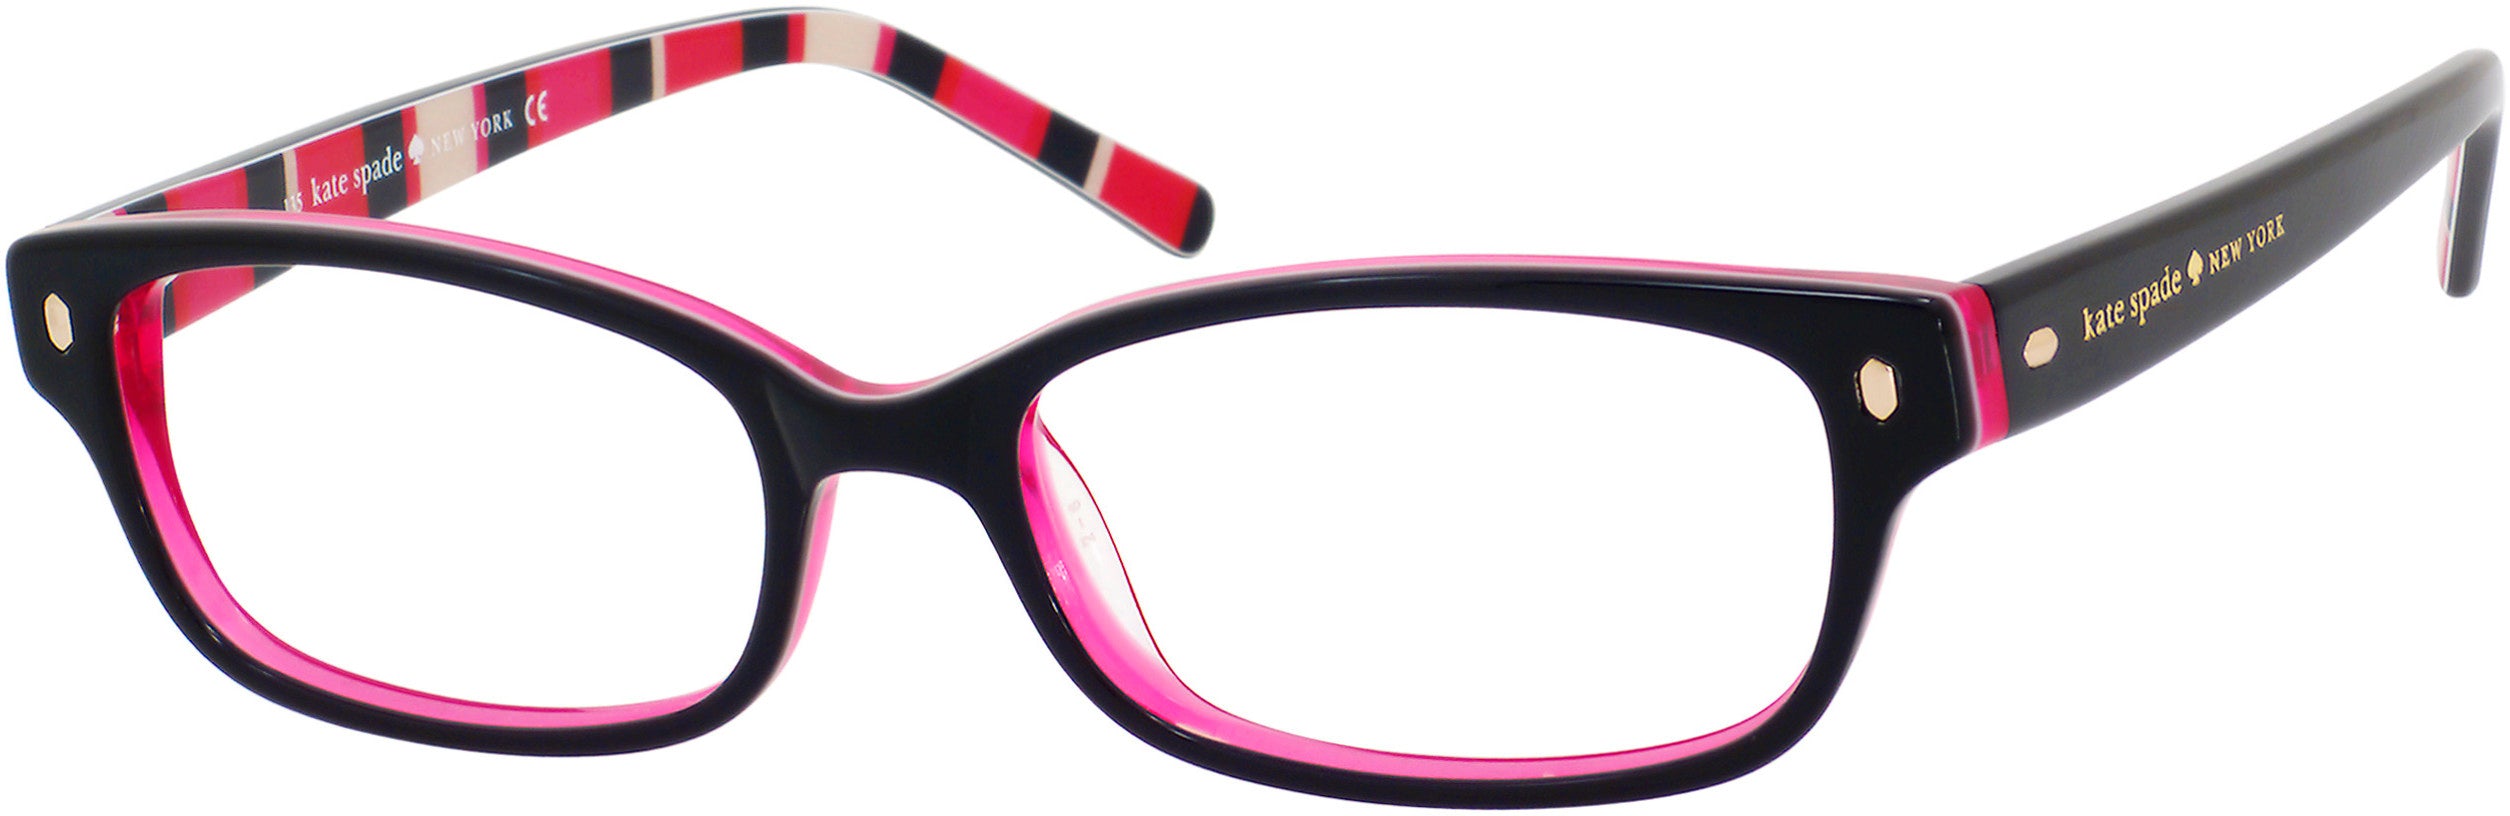 Kate Spade Lucyann Us Rectangular Eyeglasses 0X78-0X78  Black Pink Striped (00 Demo Lens)